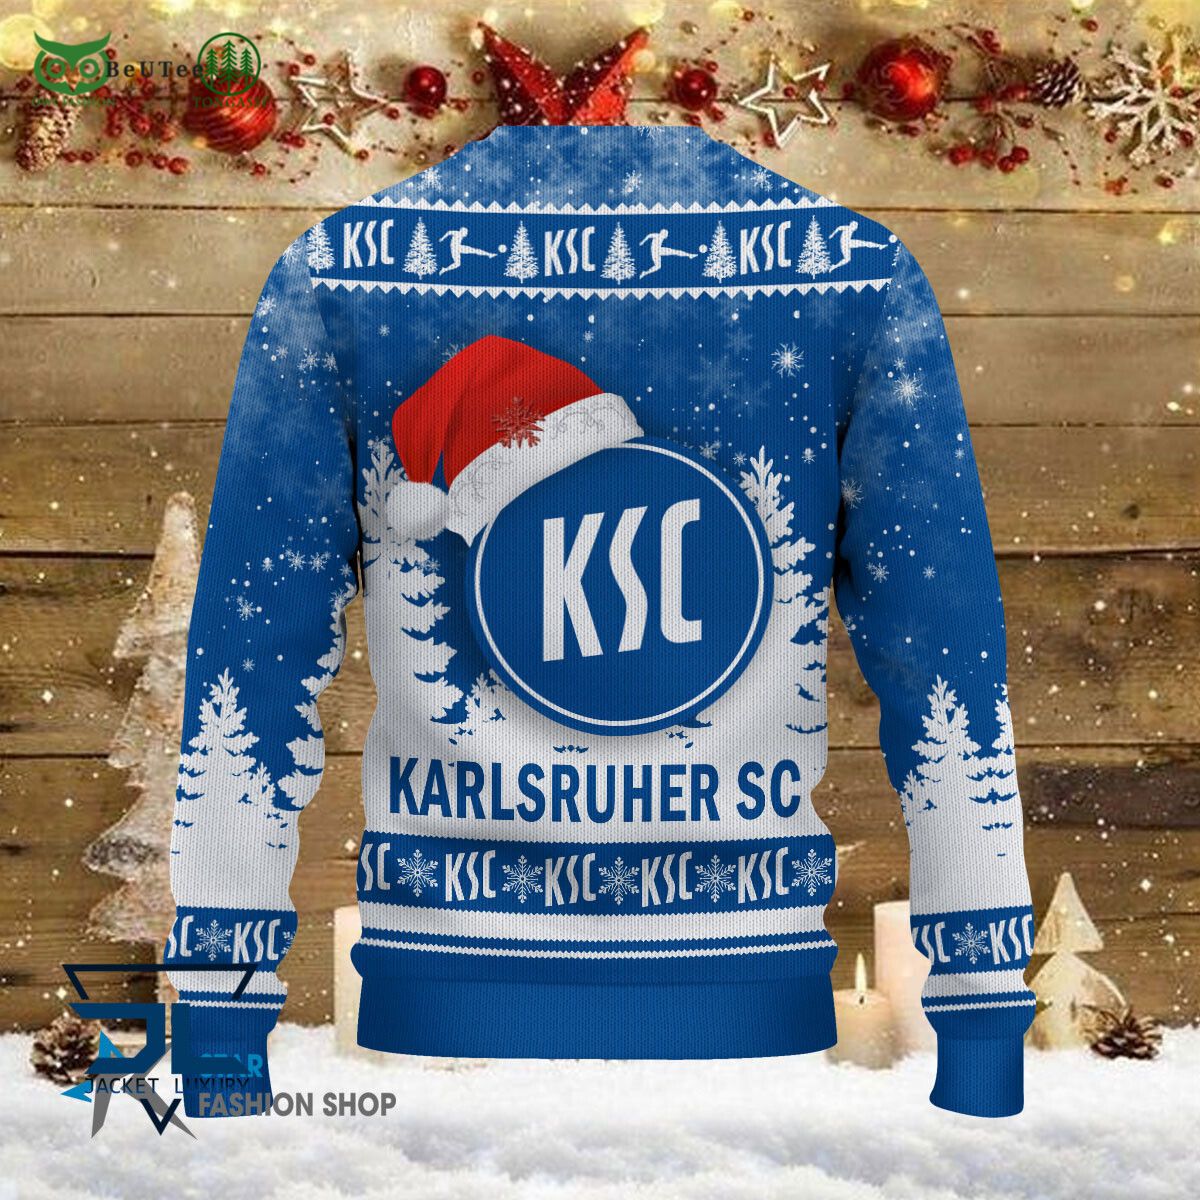 karlsruher sc bundesliga germany league ugly sweater 3 ycf94